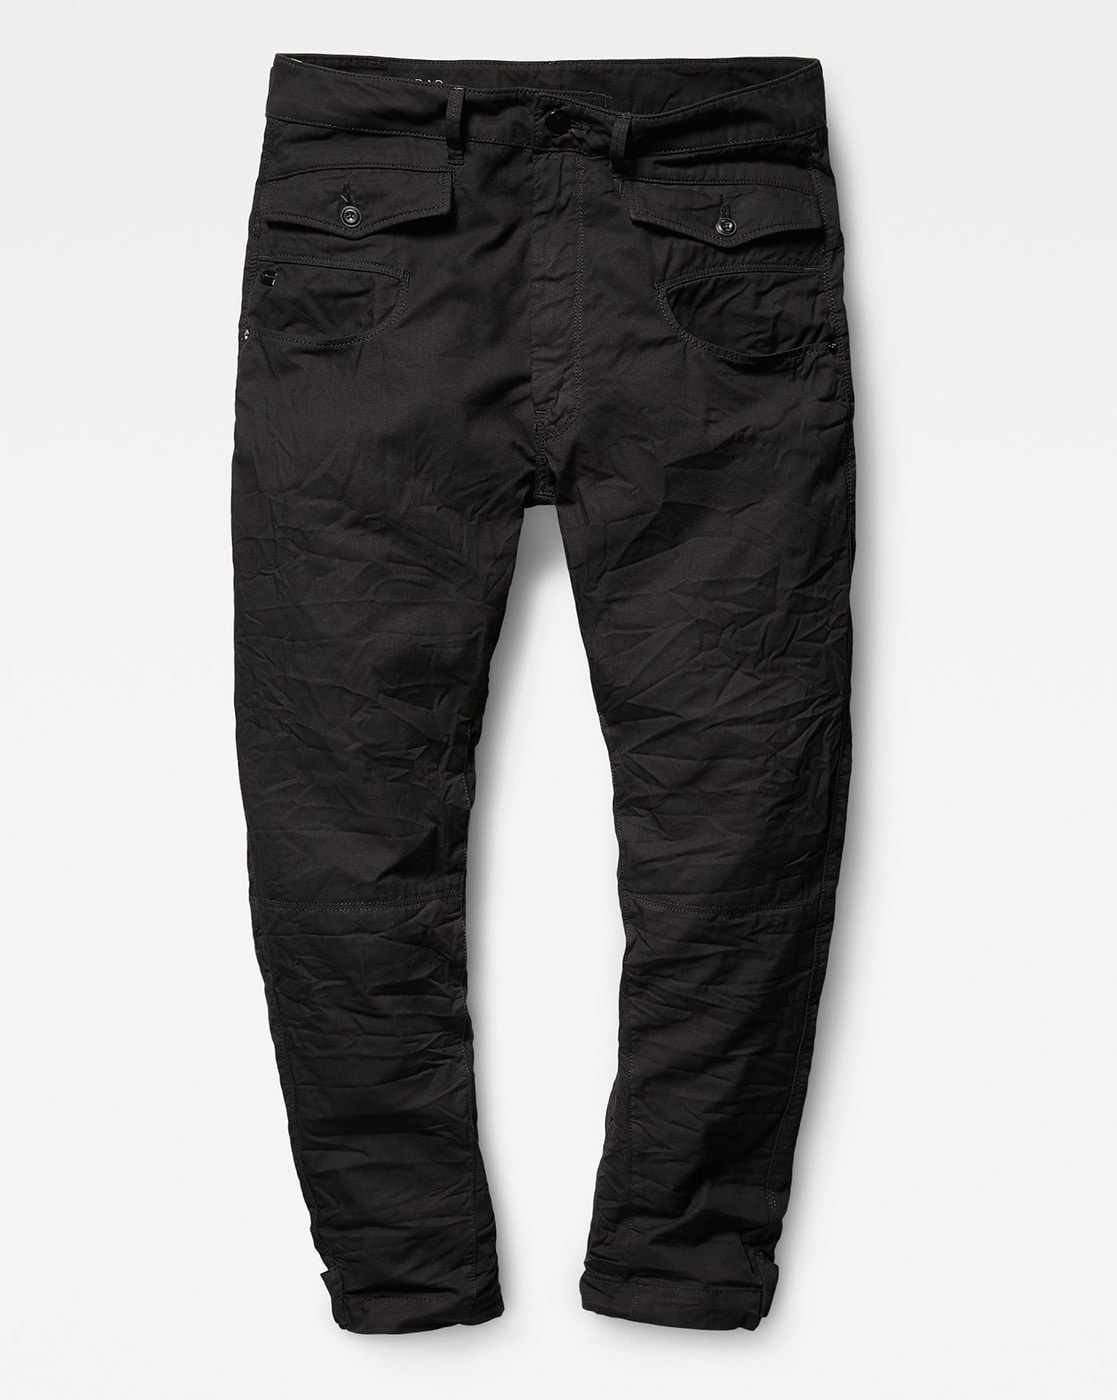 black army jeans